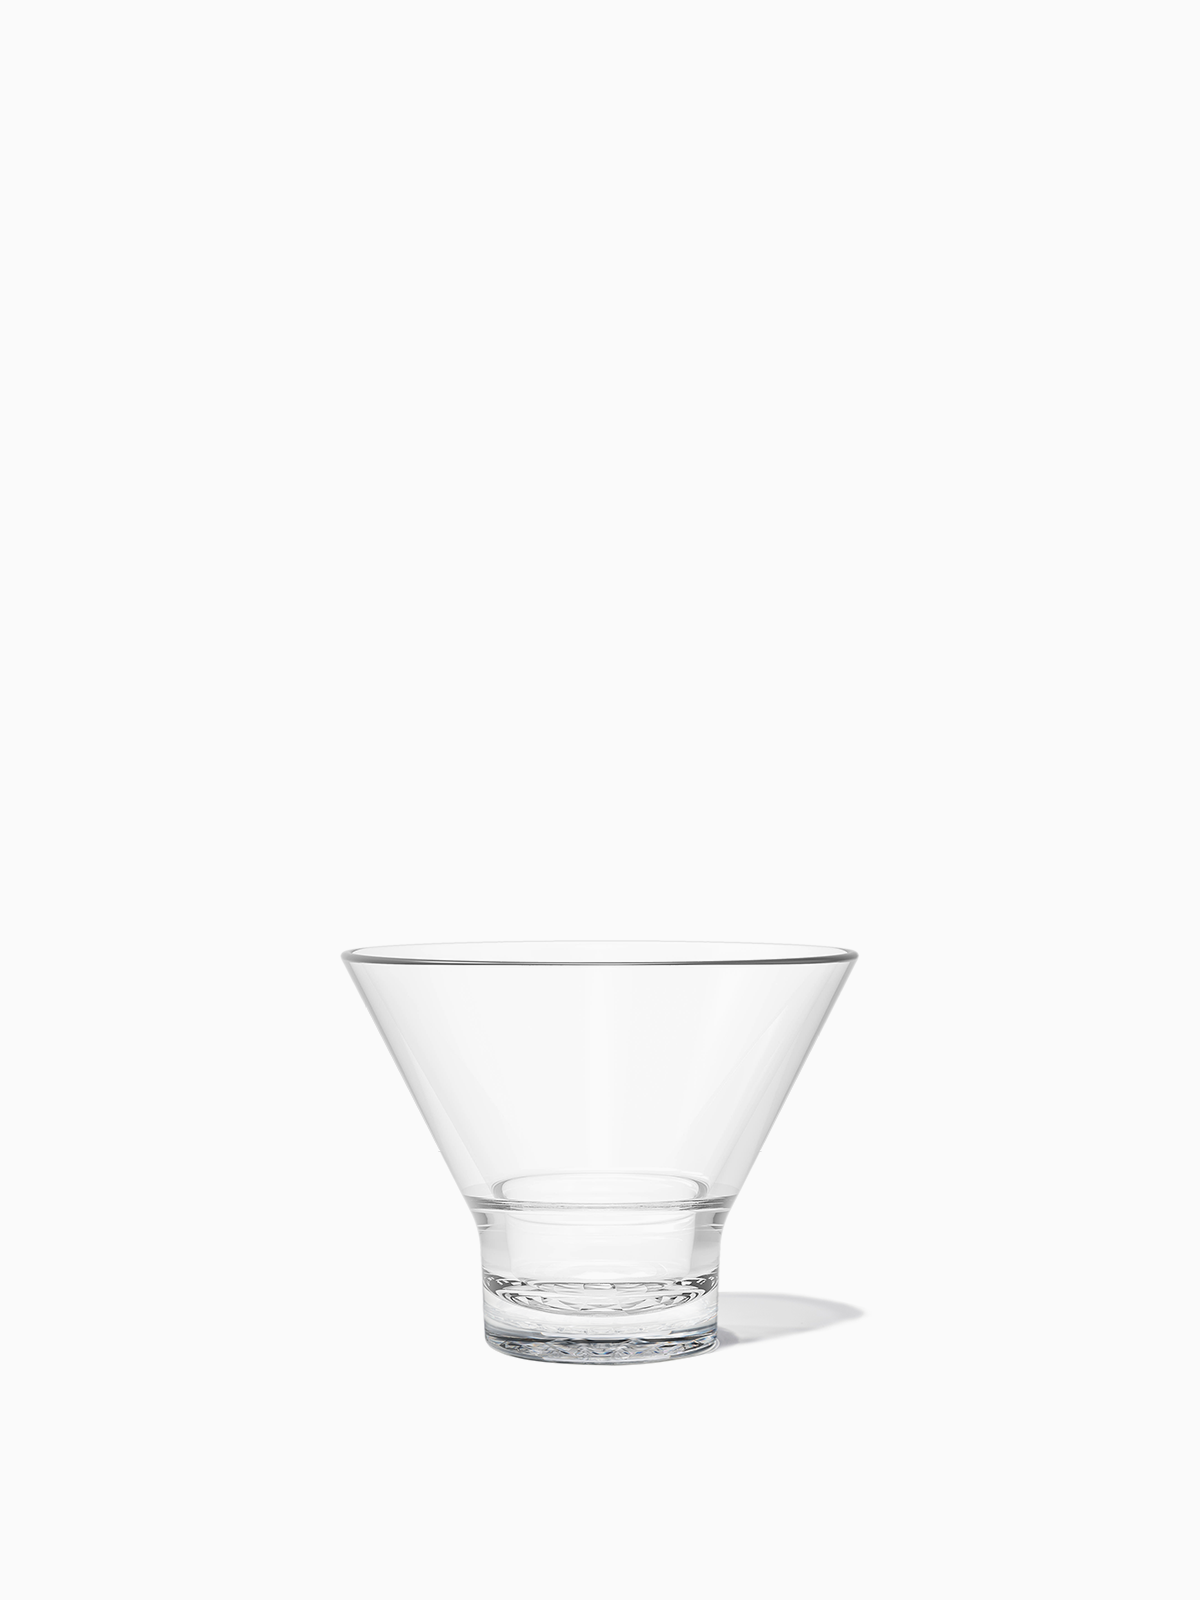 Unbreakable Martini Glasses - 100% Tritan - Shatterproof, Reusable, Dishwasher 4